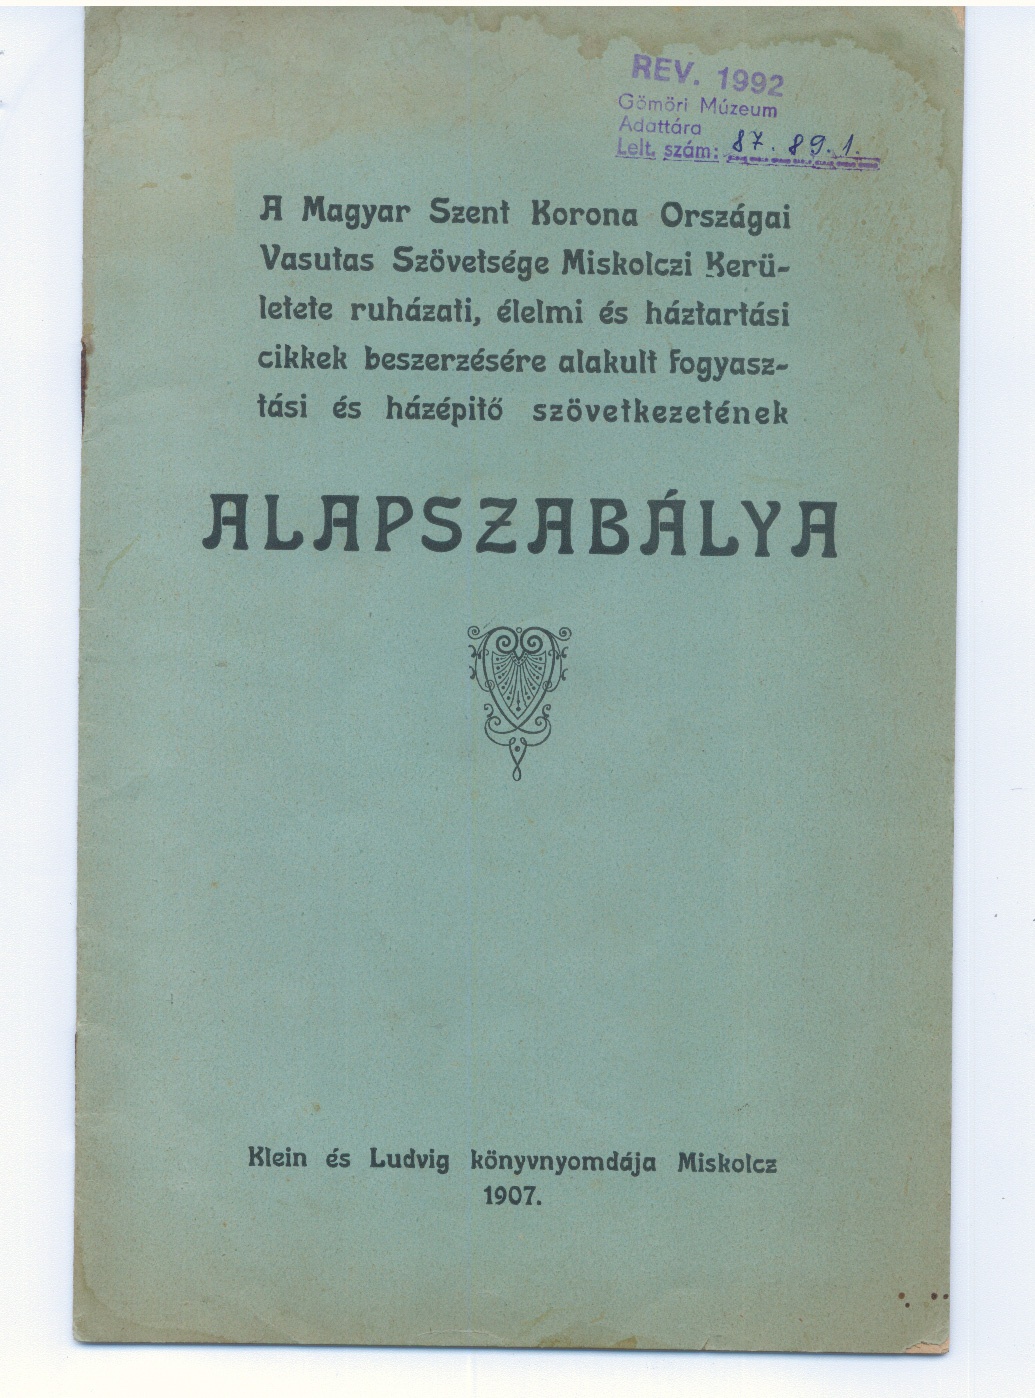 Alapszabály 1907. (Gömöri Múzeum, Putnok CC BY-NC-SA)